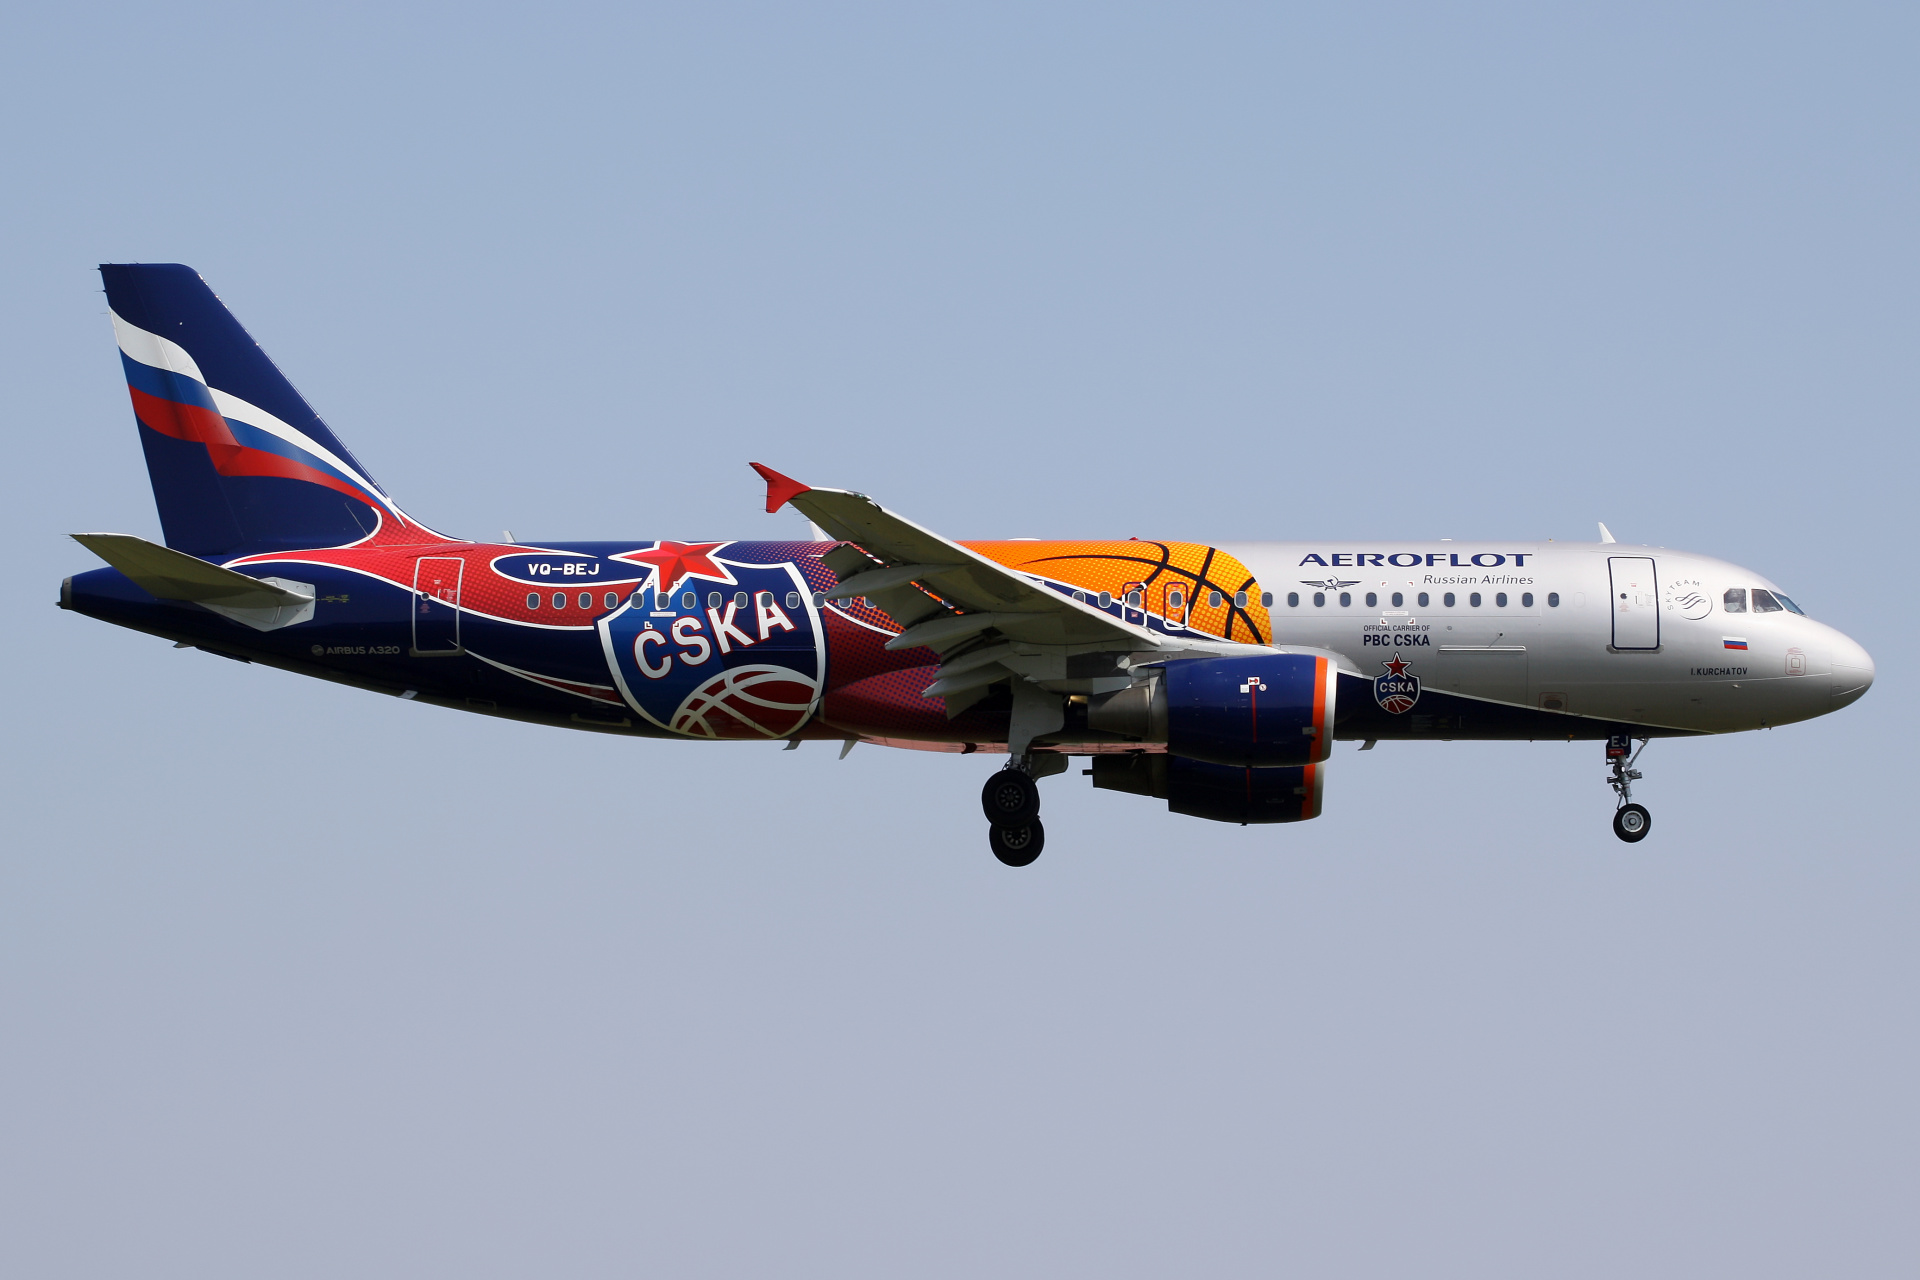 VQ-BEJ (PBC CSKA livery) (Aircraft » EPWA Spotting » Airbus A320-200 » Aeroflot Russian Airlines)